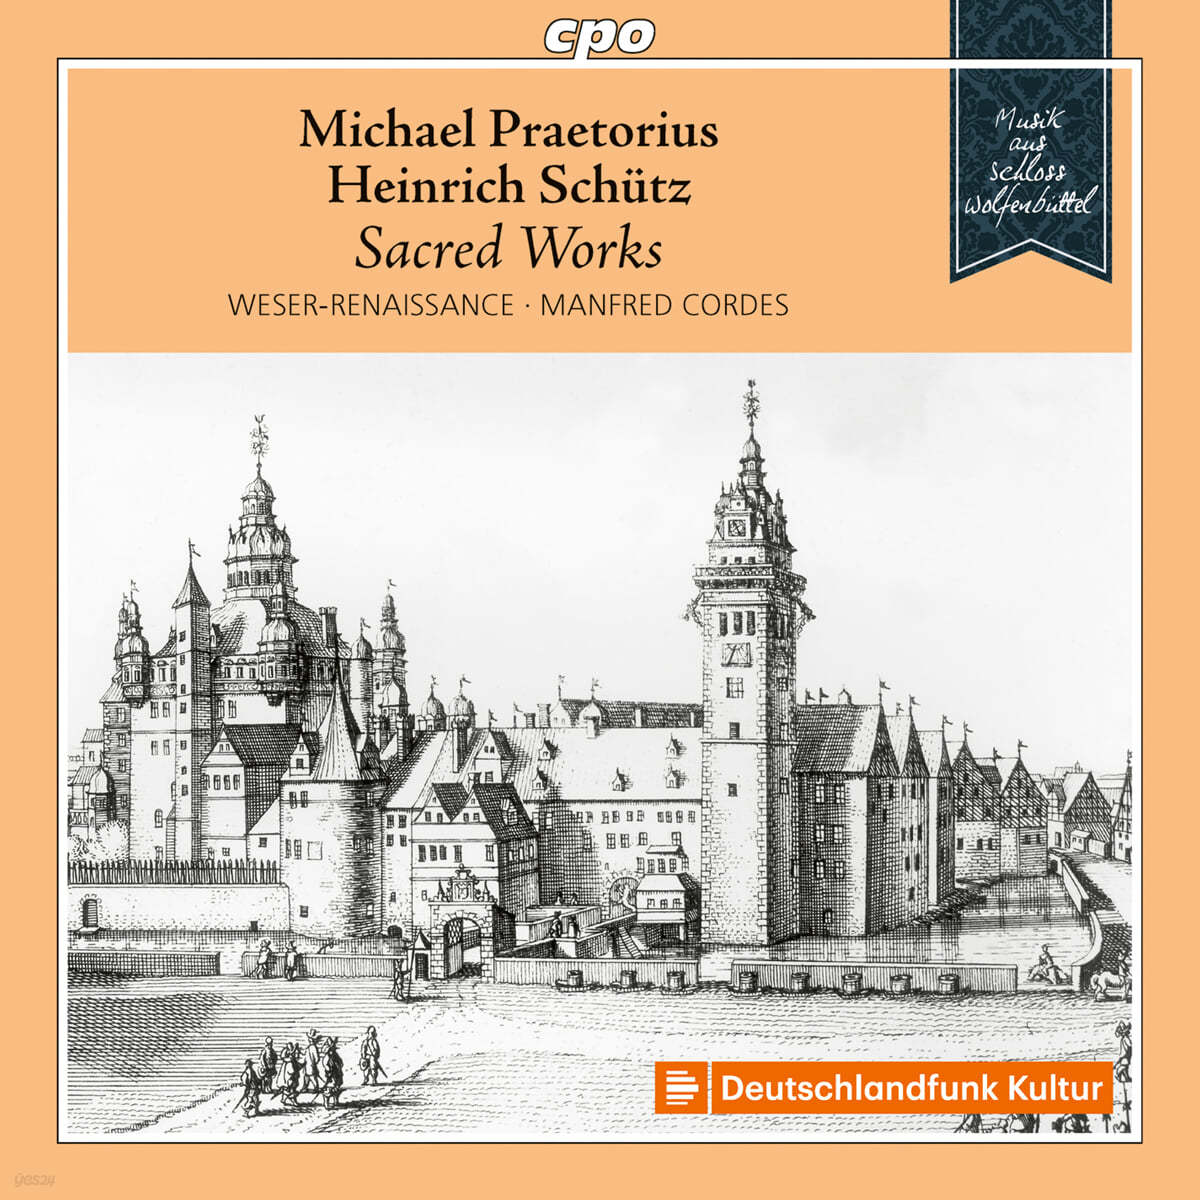 Manfred Cordes 프레토리우스 / 쉬츠: 같은 가사에 붙인 교회 음악 작품들 (Musik aus Schloss Wolfenbuttel Vol.6)